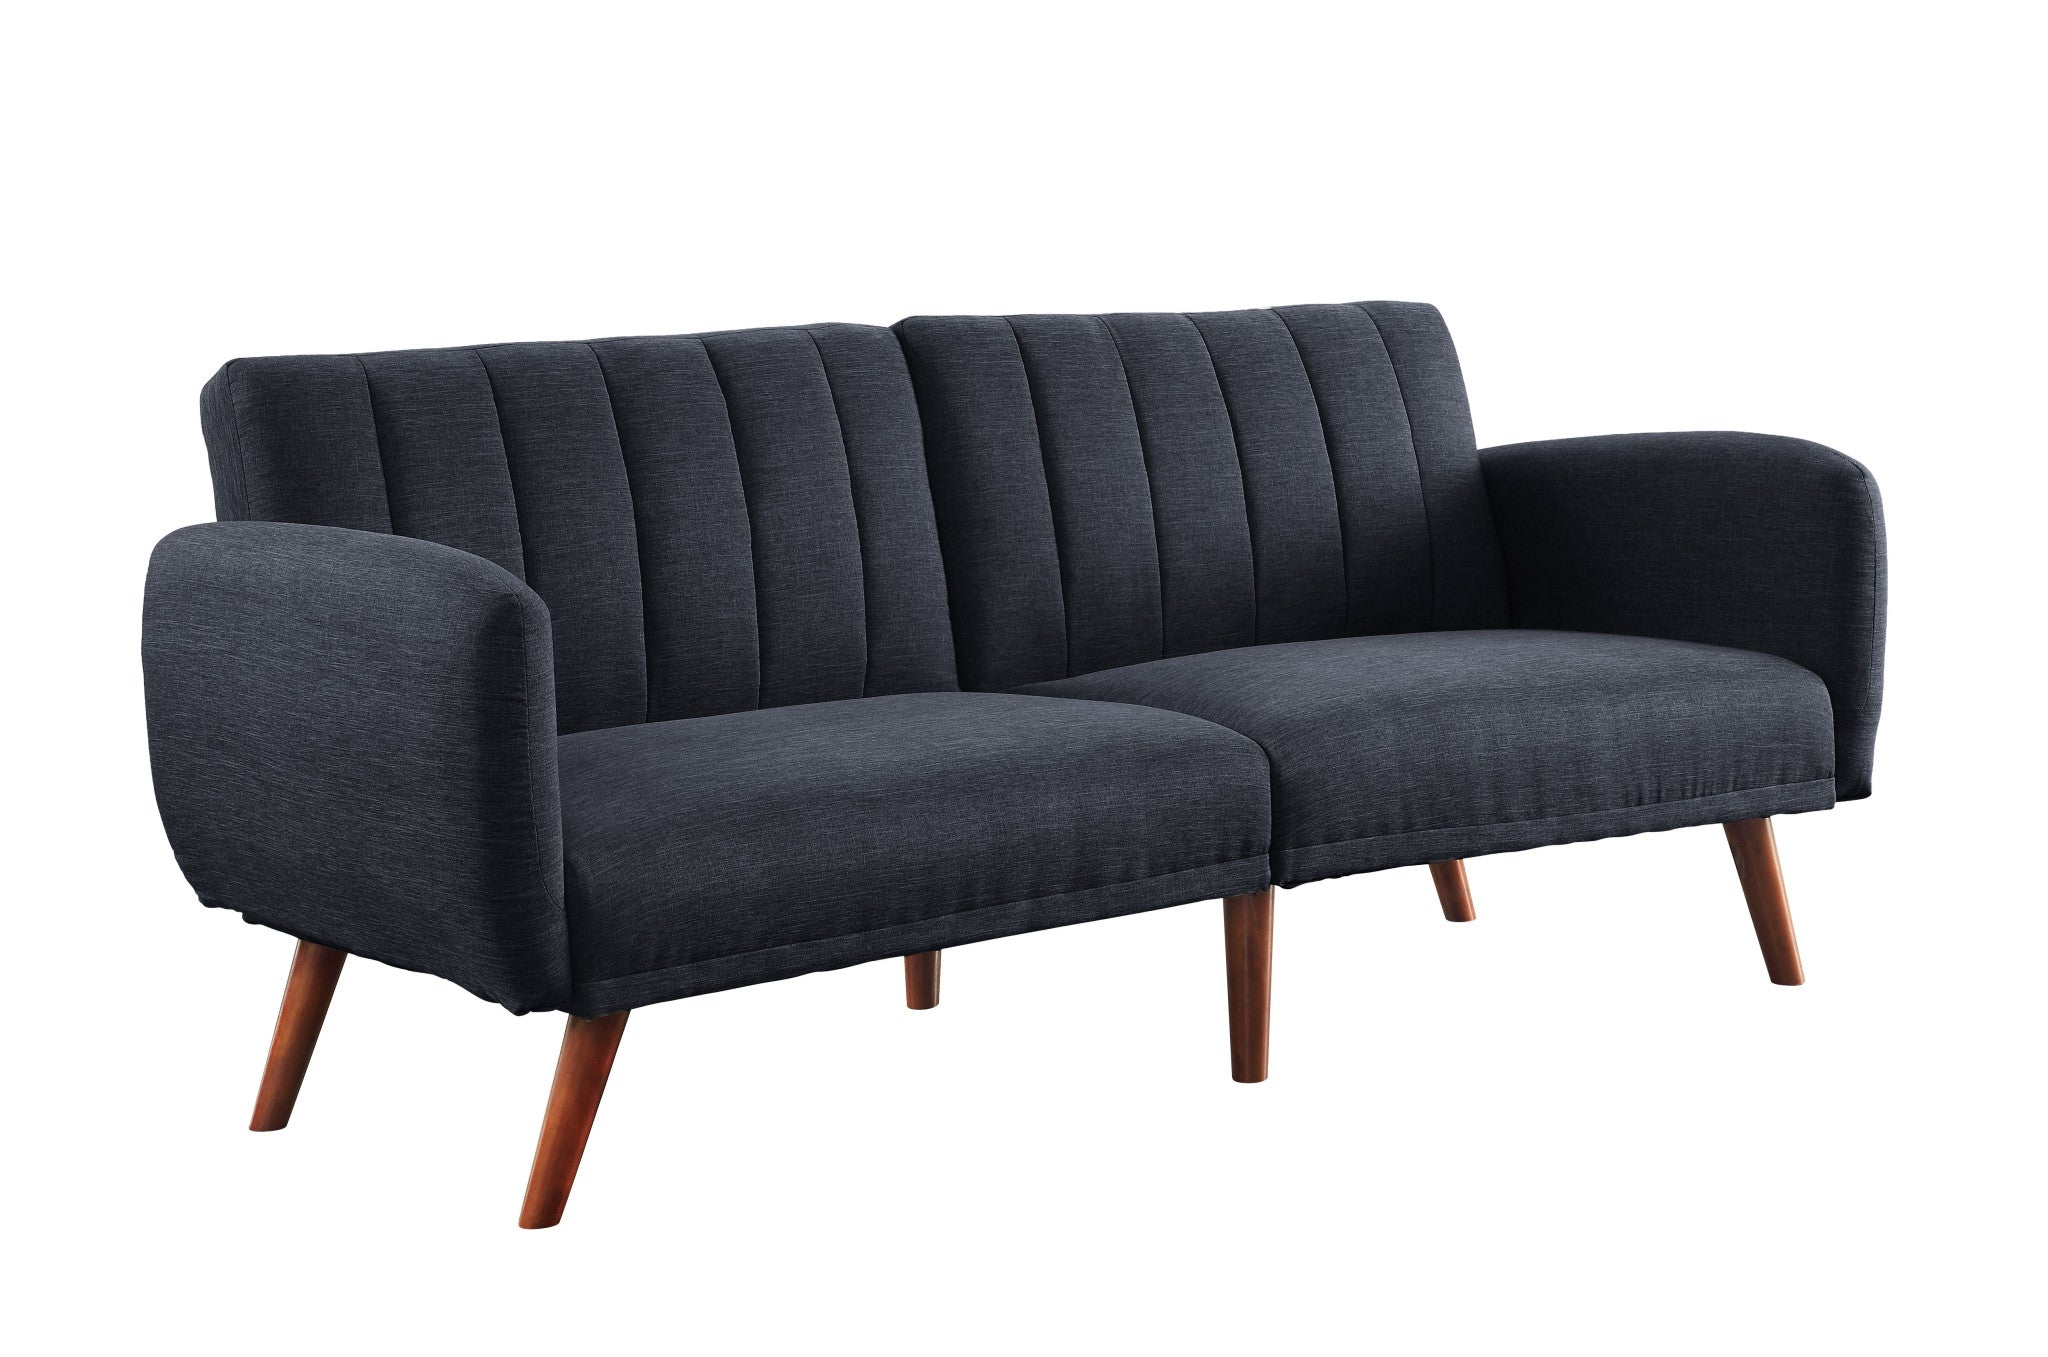 76" Gray Linen And Wood Brown Sleeper Sofa